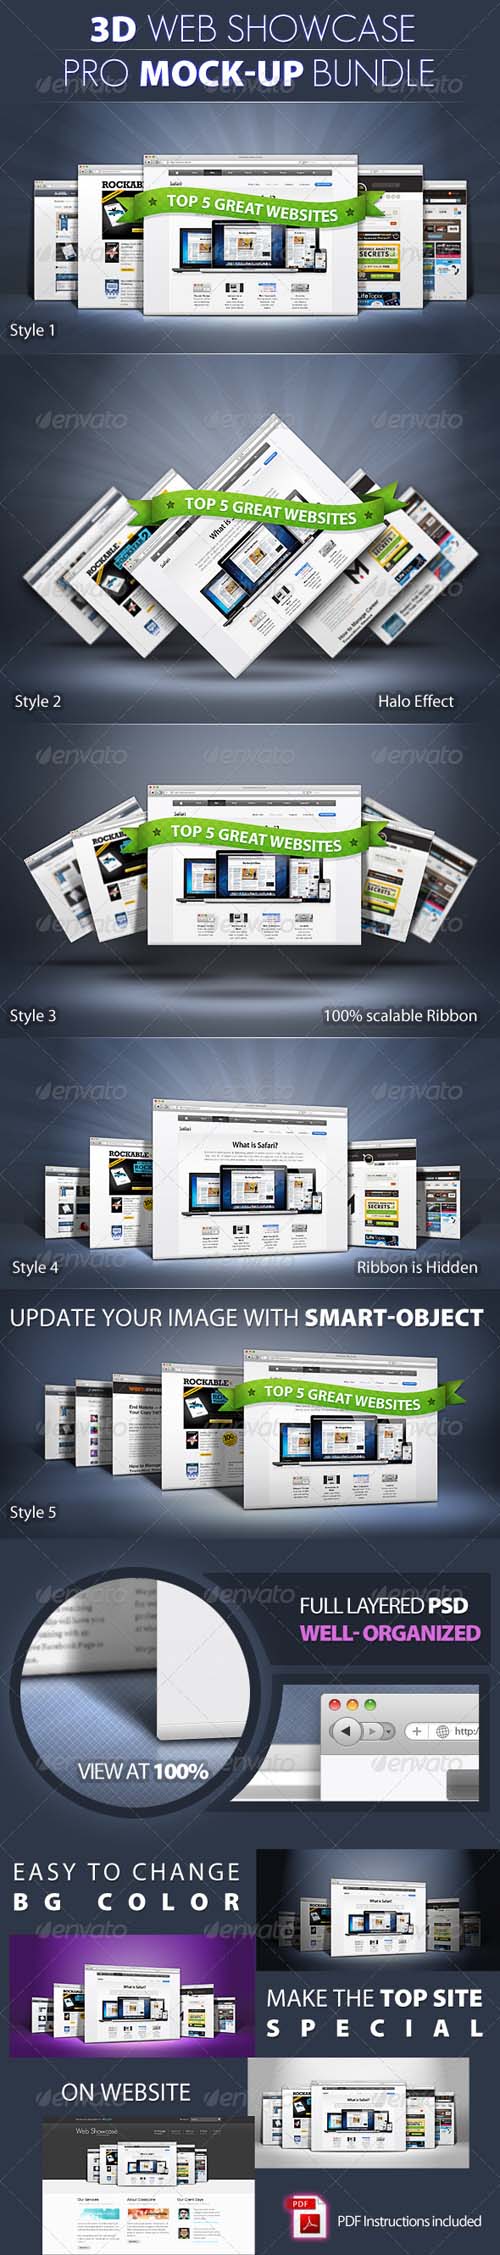 Graphicriver - PRO 3d Web Showcase Mock-ups PSD Template